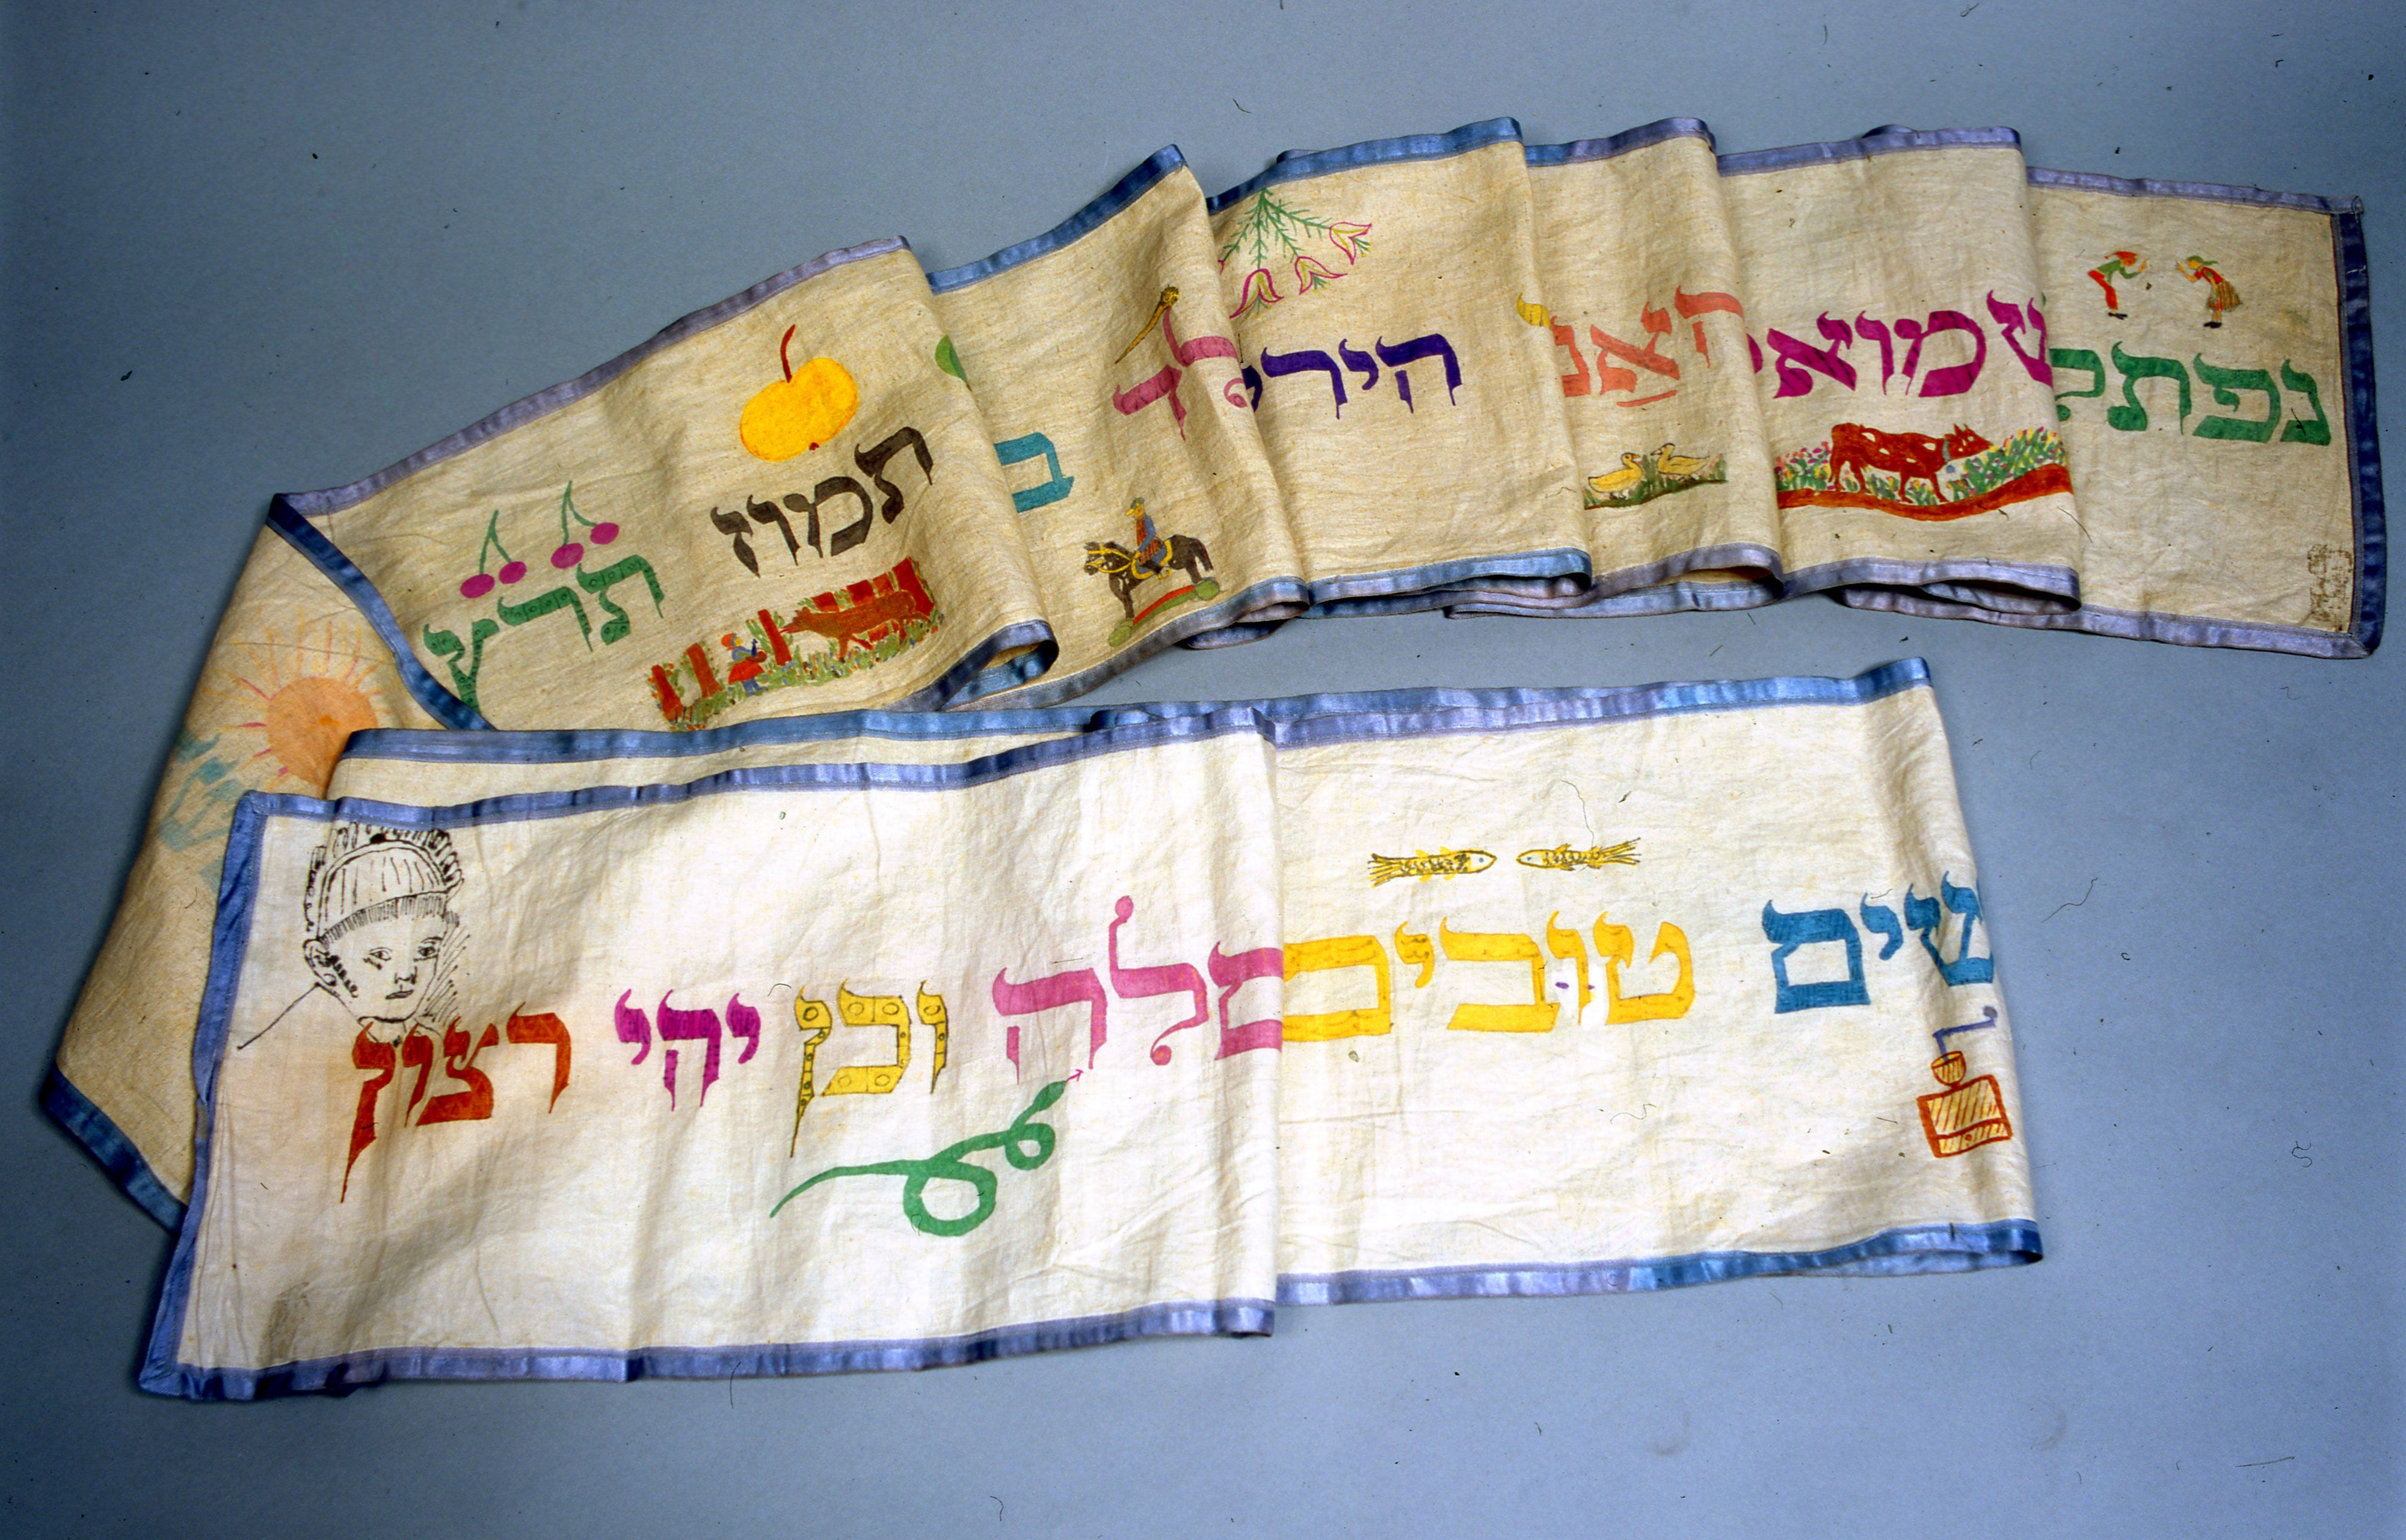 Buy Israel T-Shirt - Shalom from Israel: Shmulik in Star (Women)